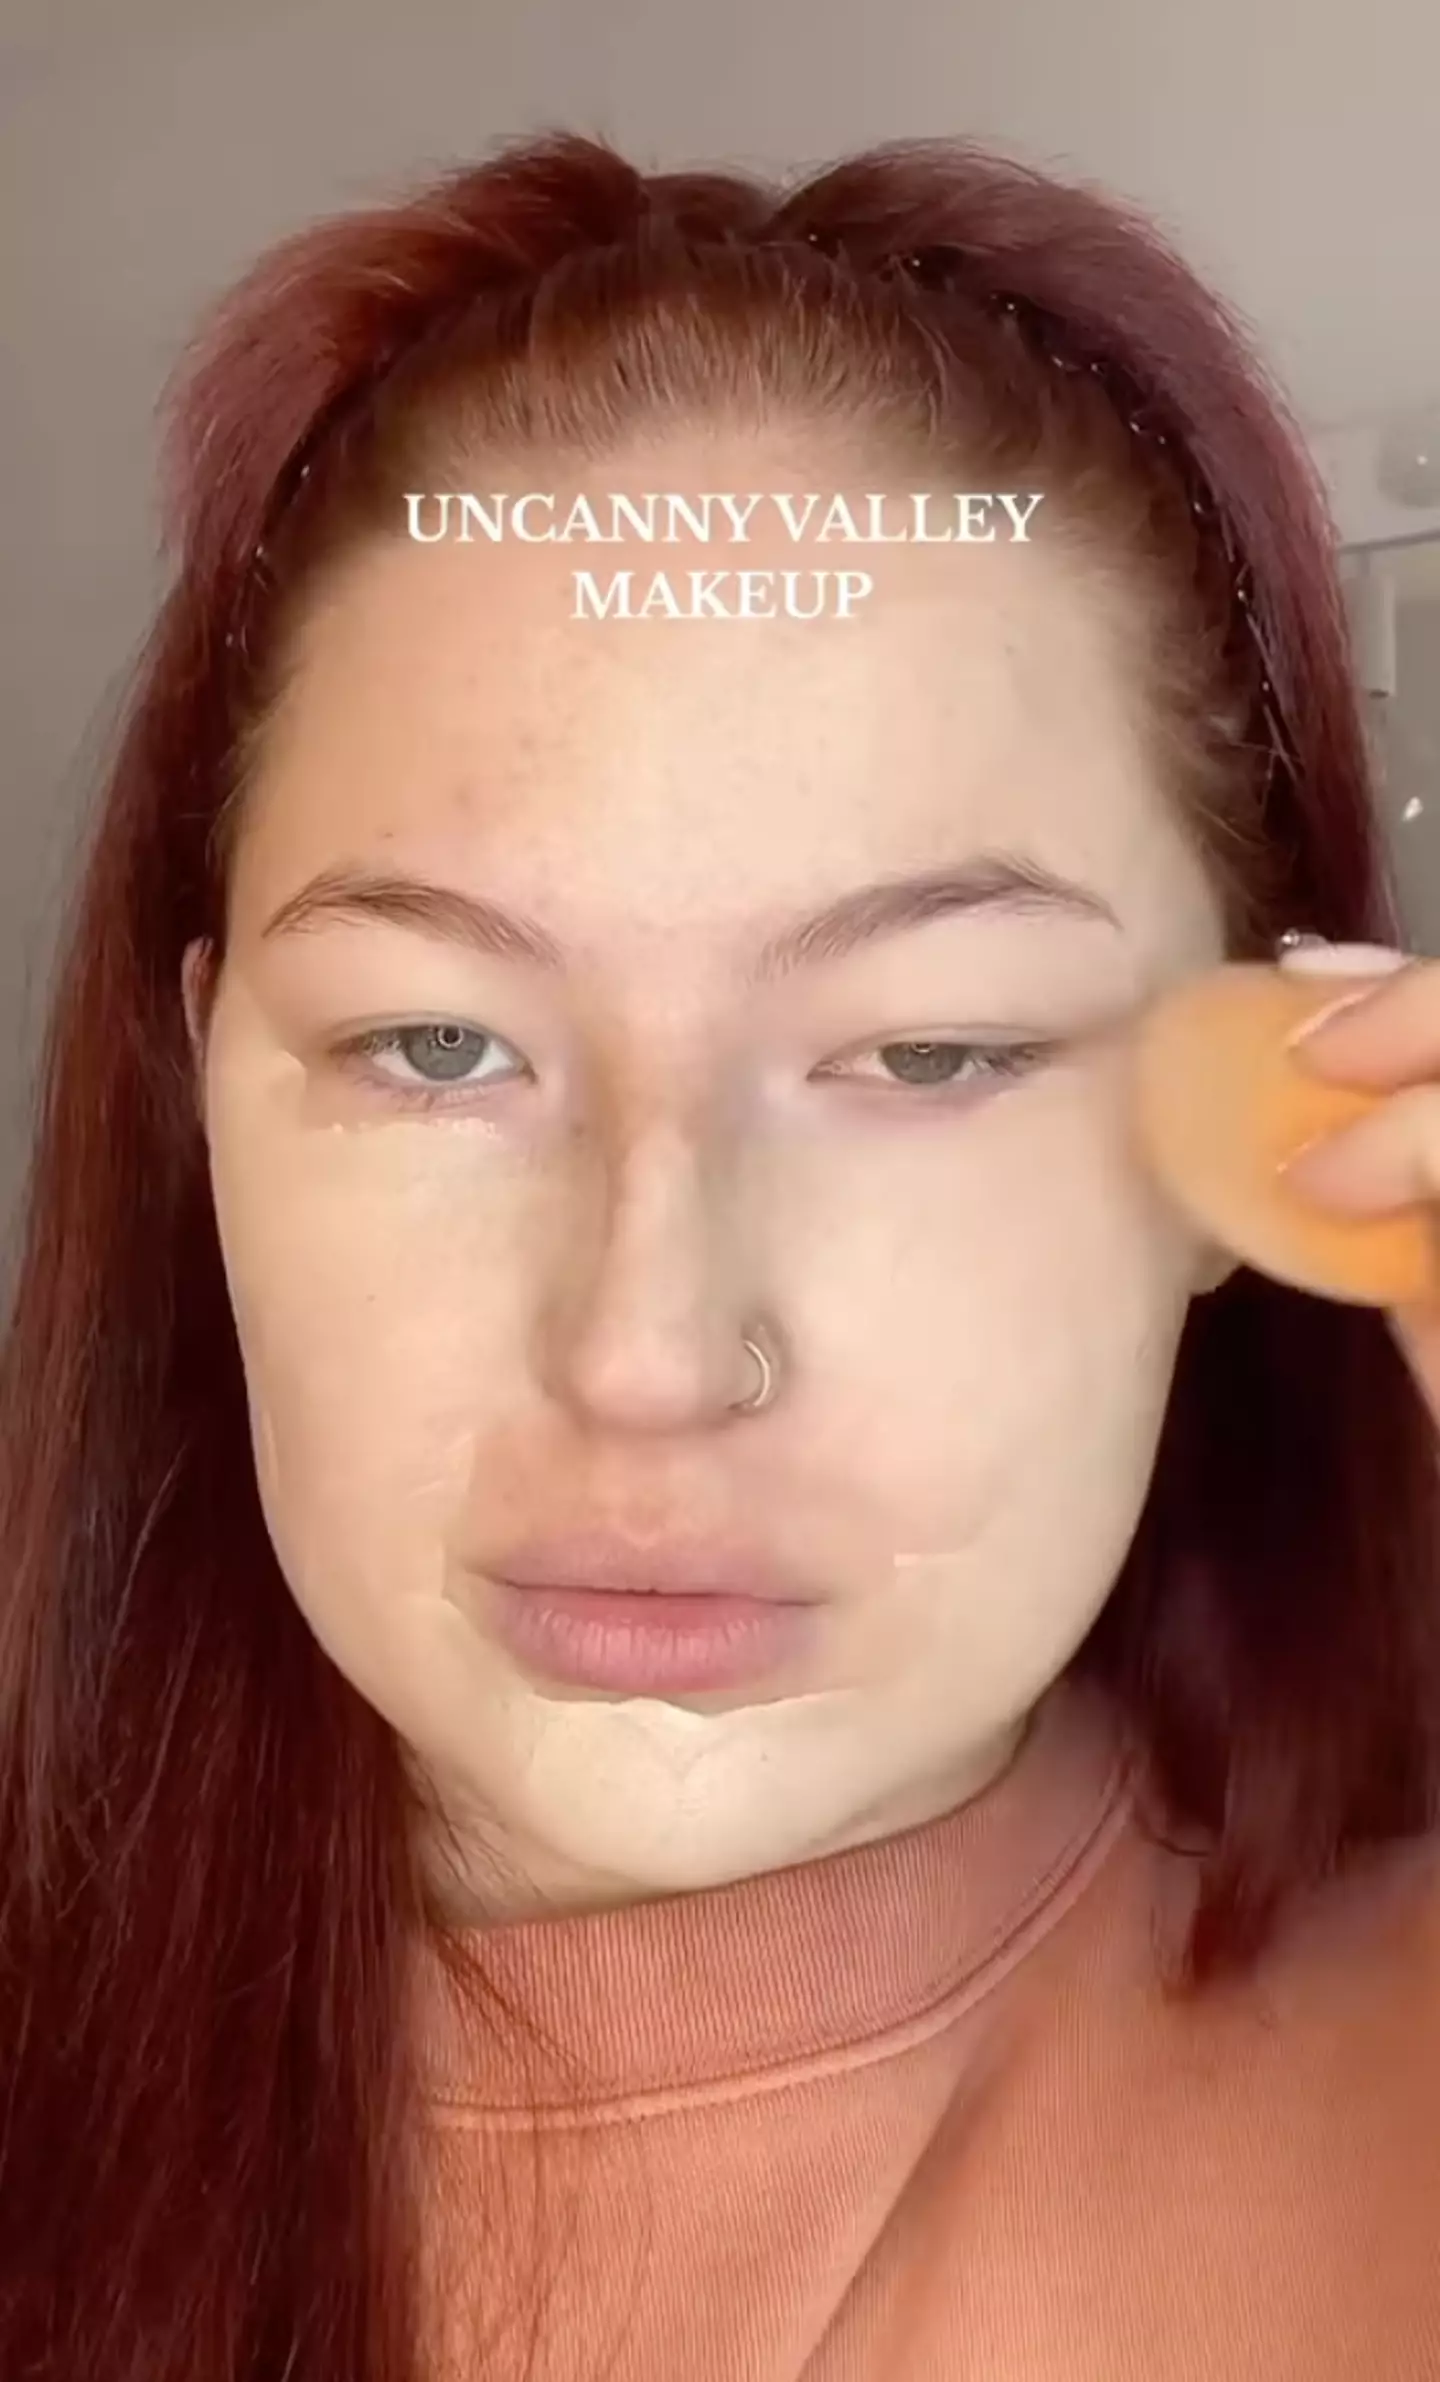 Make-up artist, Meg Murphy, went viral on Instagram for her creepy make-up tutorial.